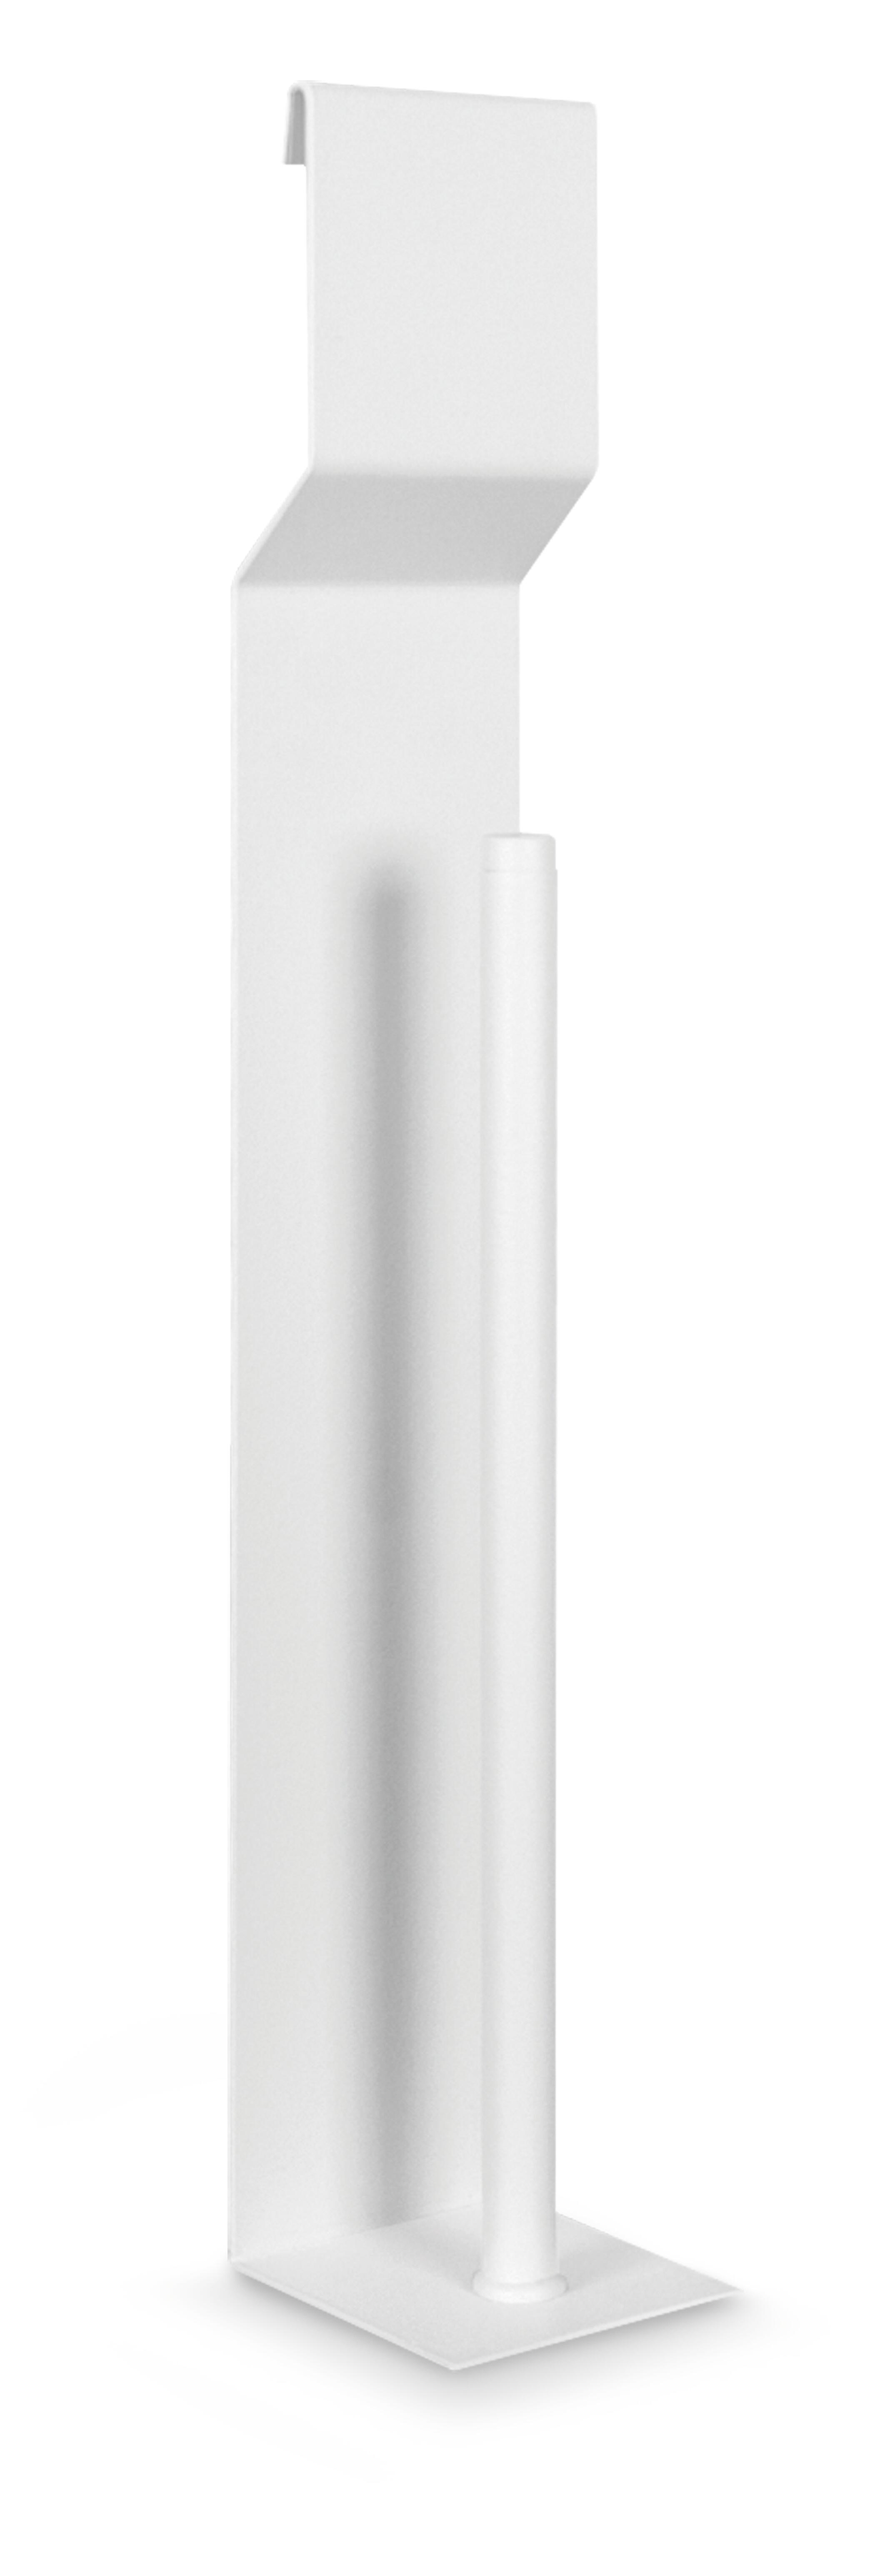 Portarrollo wc tokio-osaka blanco aspecto texturizado 8x47 cm